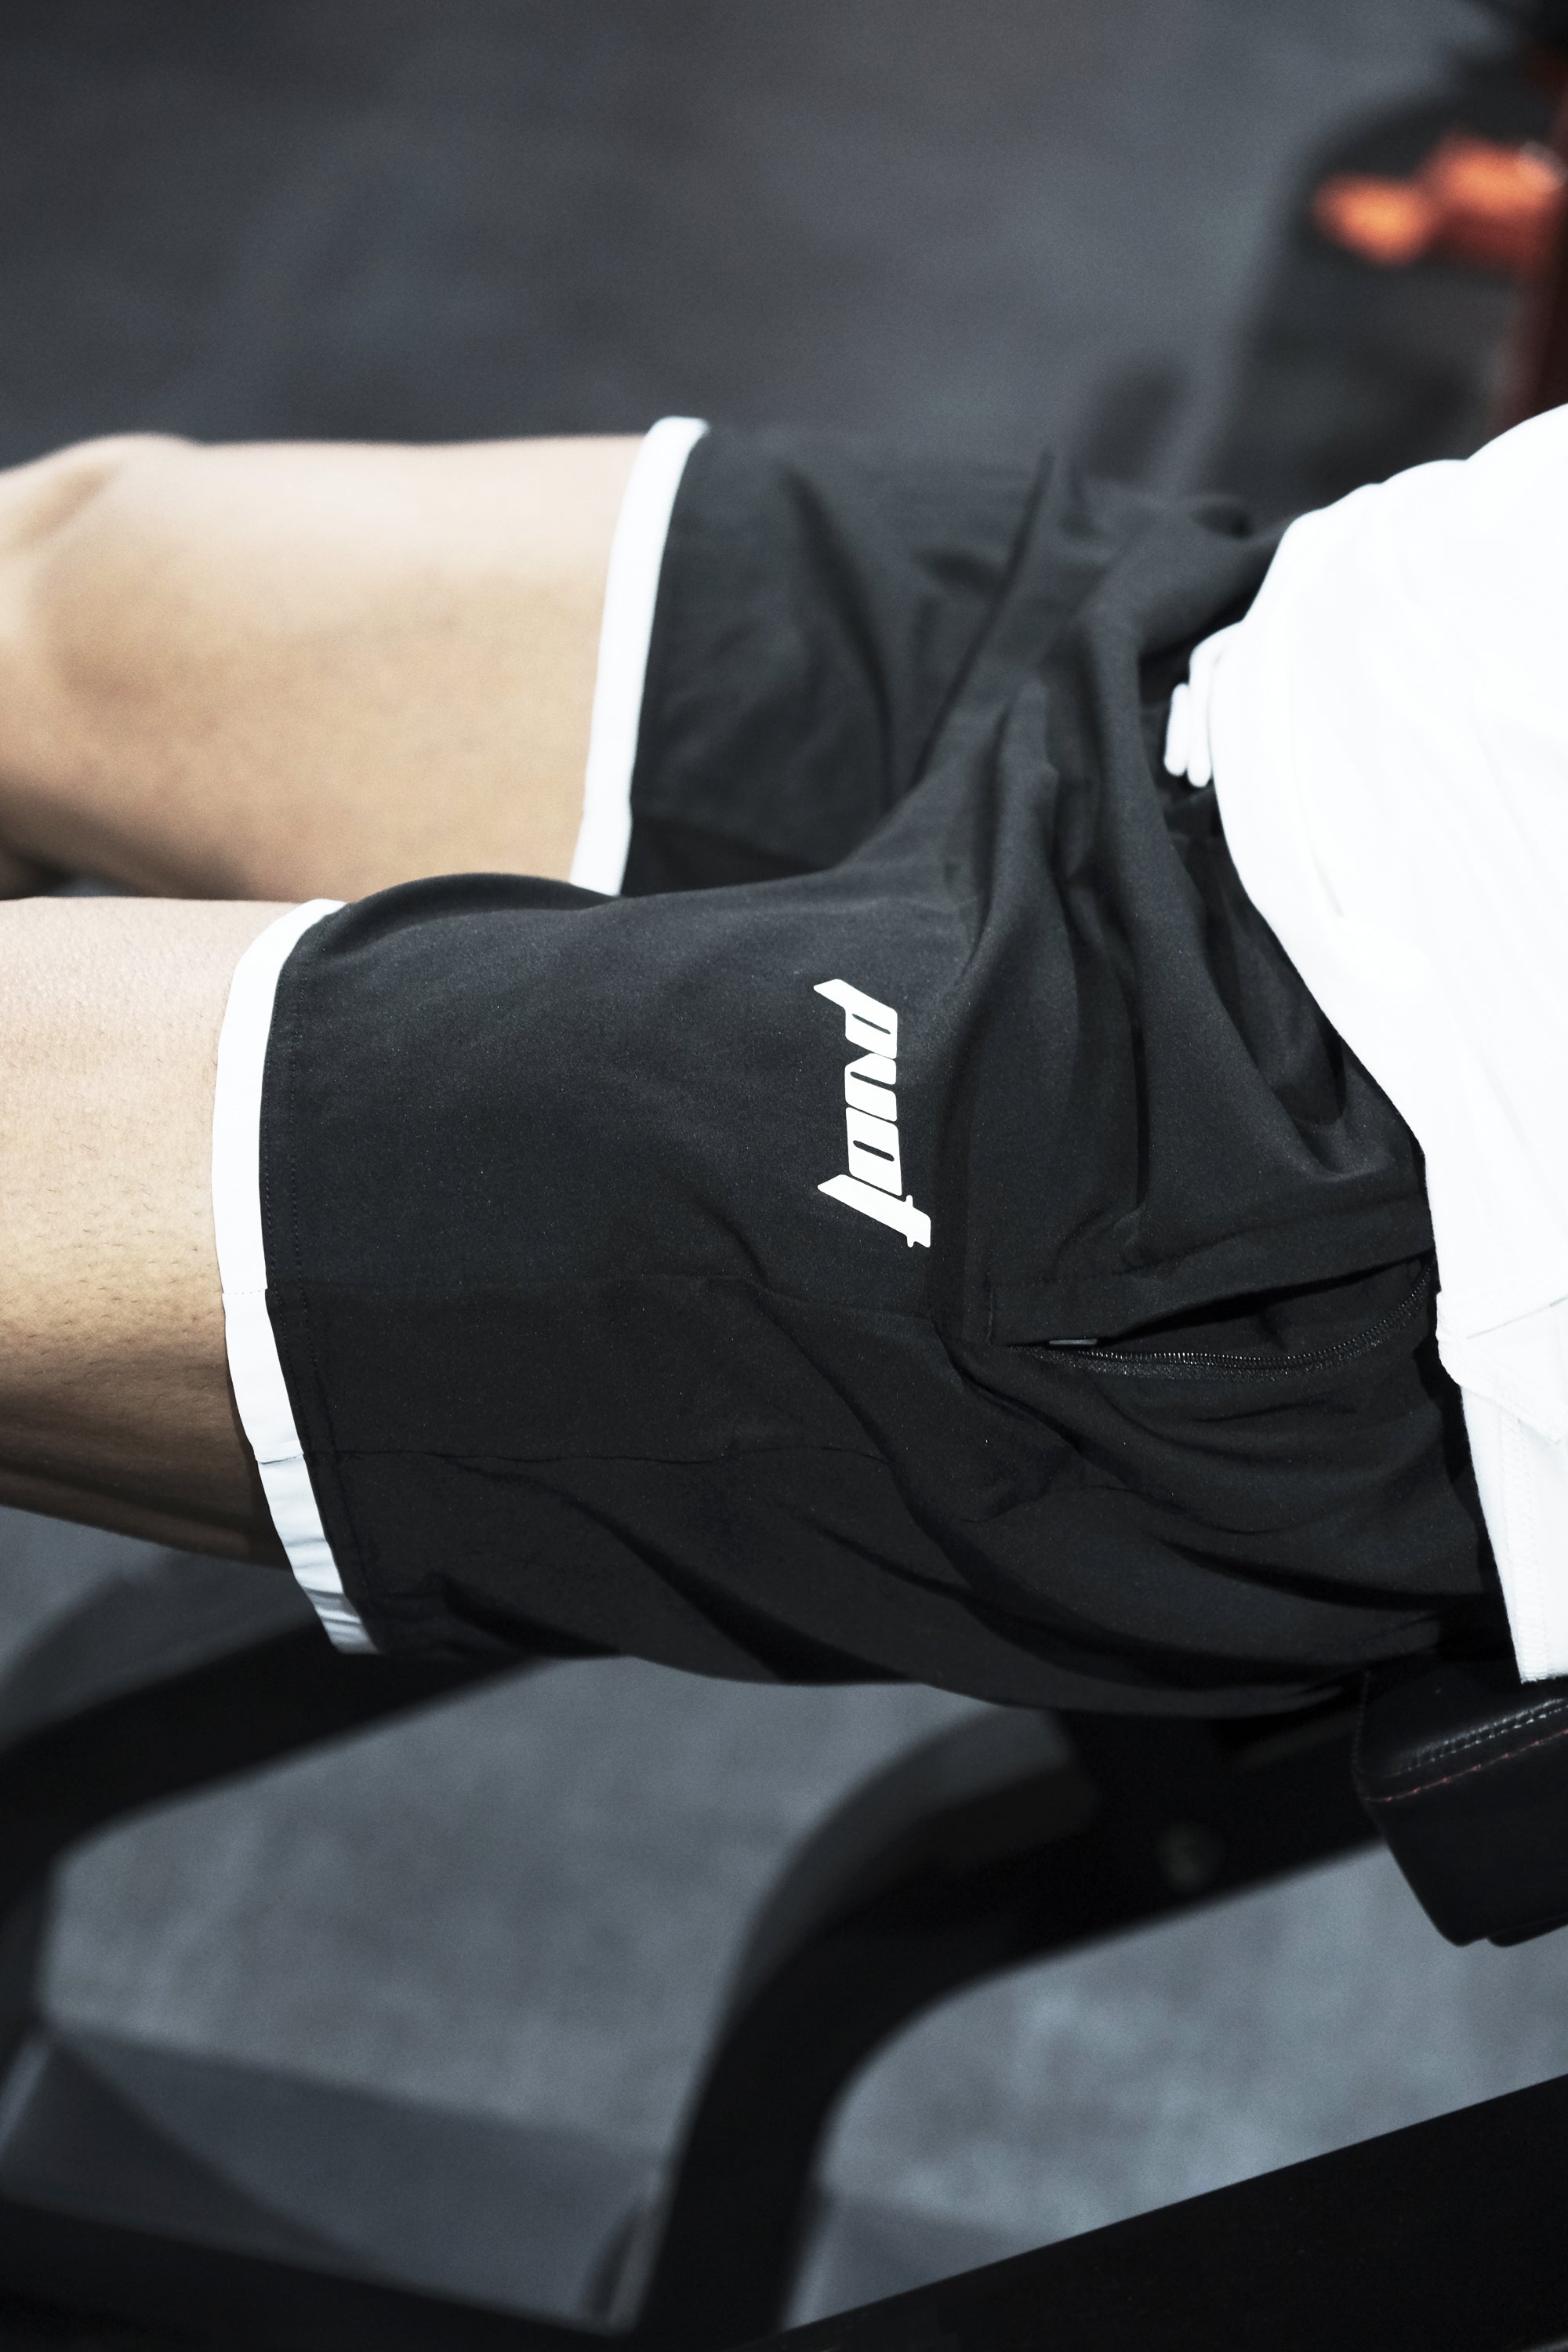 Pvot Athleisure Nylon Shorts (Black)